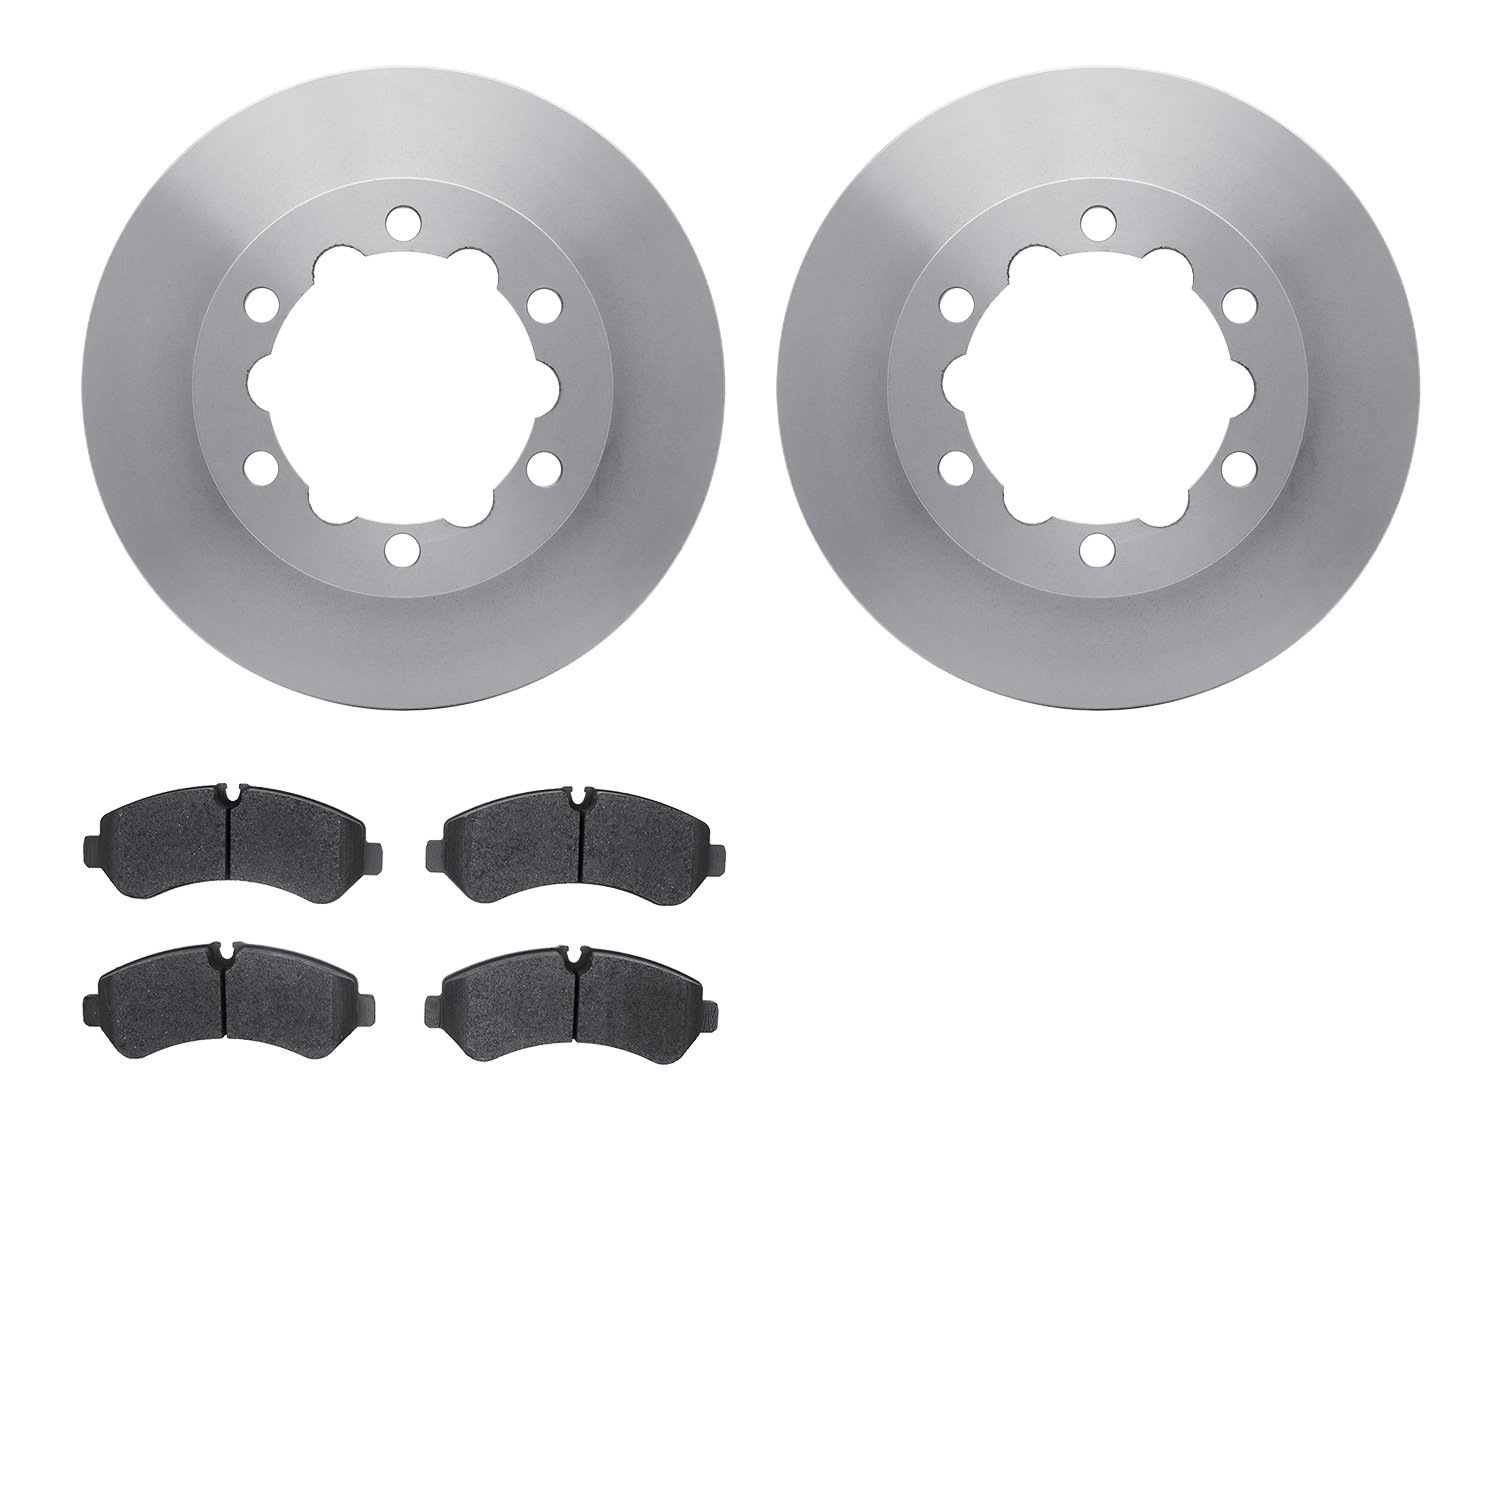 6502-63538 Brake Rotors w/5000 Advanced Brake Pads Kit, Fits Select Multiple Makes/Models, Position: Rear